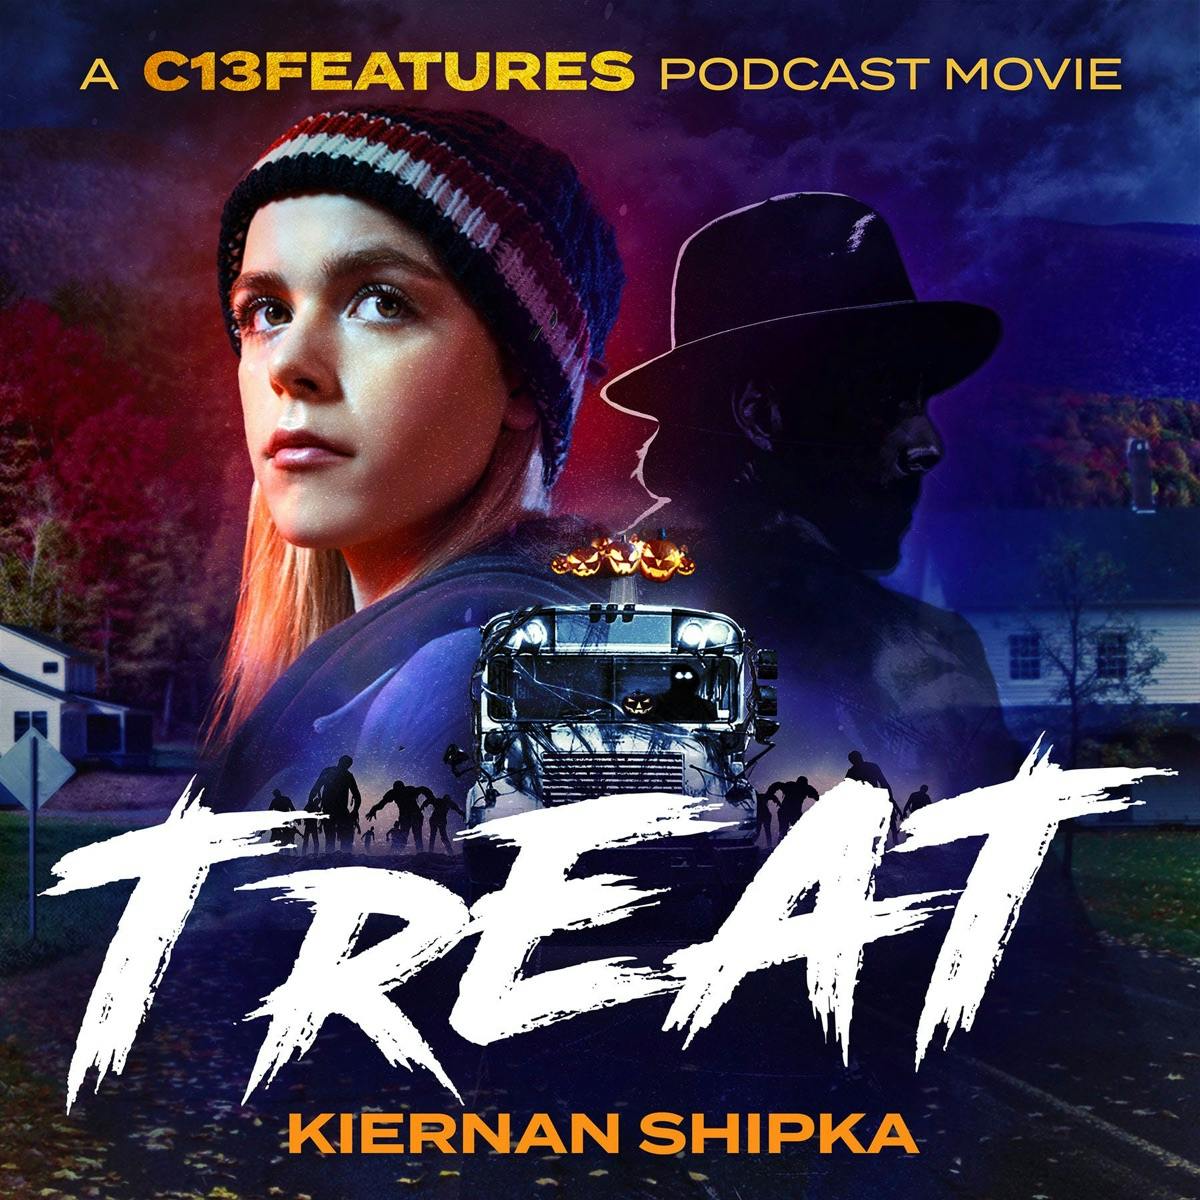 C13Features Presents: Treat, Starring Kiernan Shipka